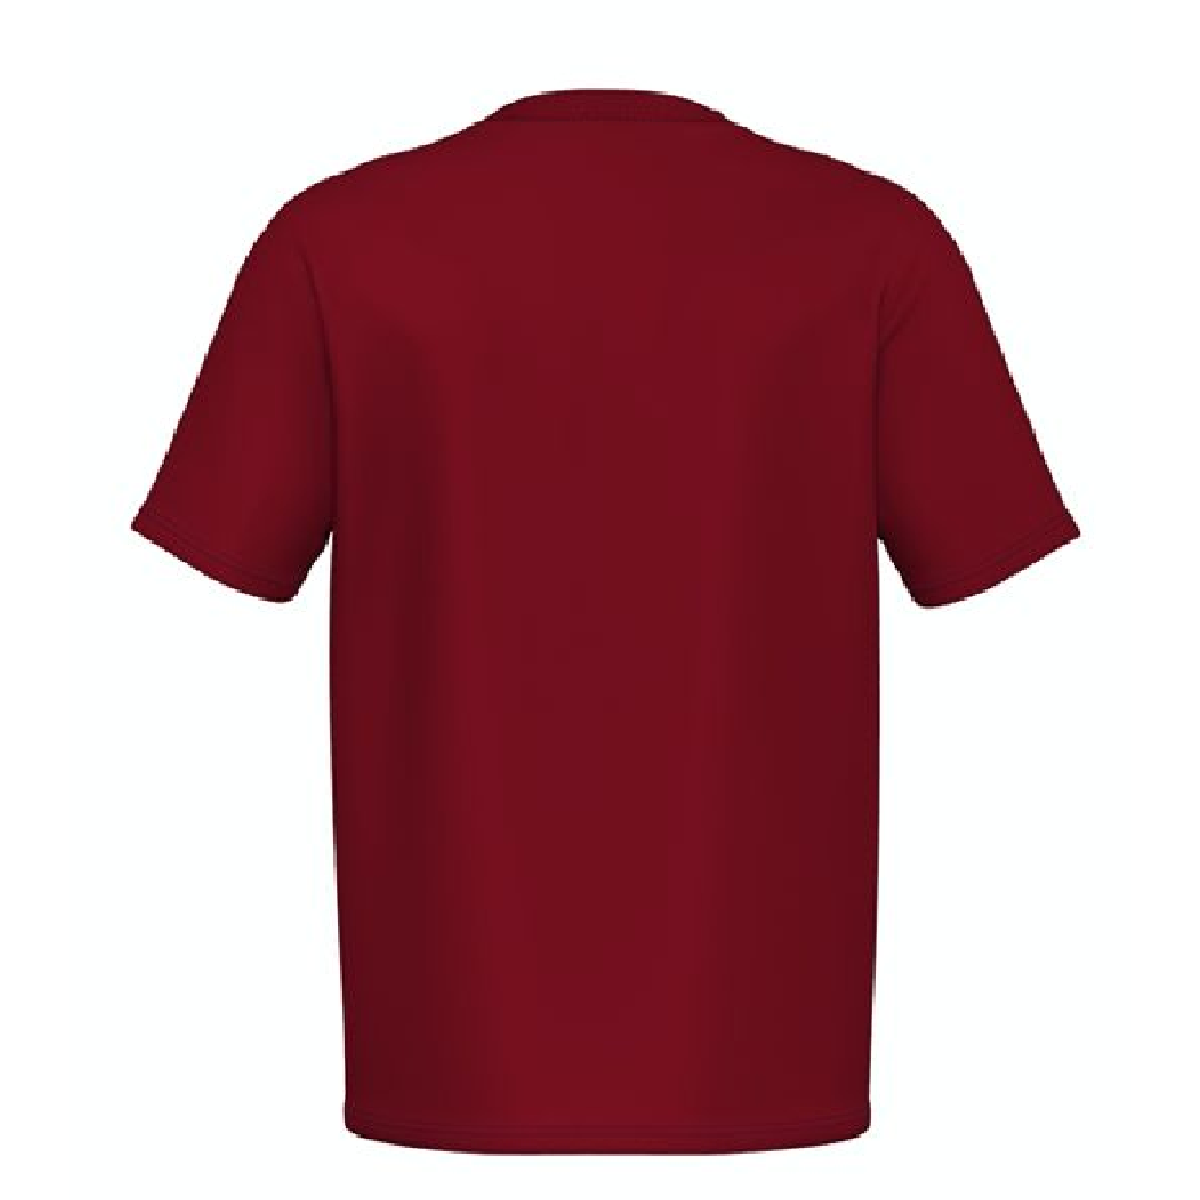 Kappa Men's Authentic Logo Bant T-Shirt - RED